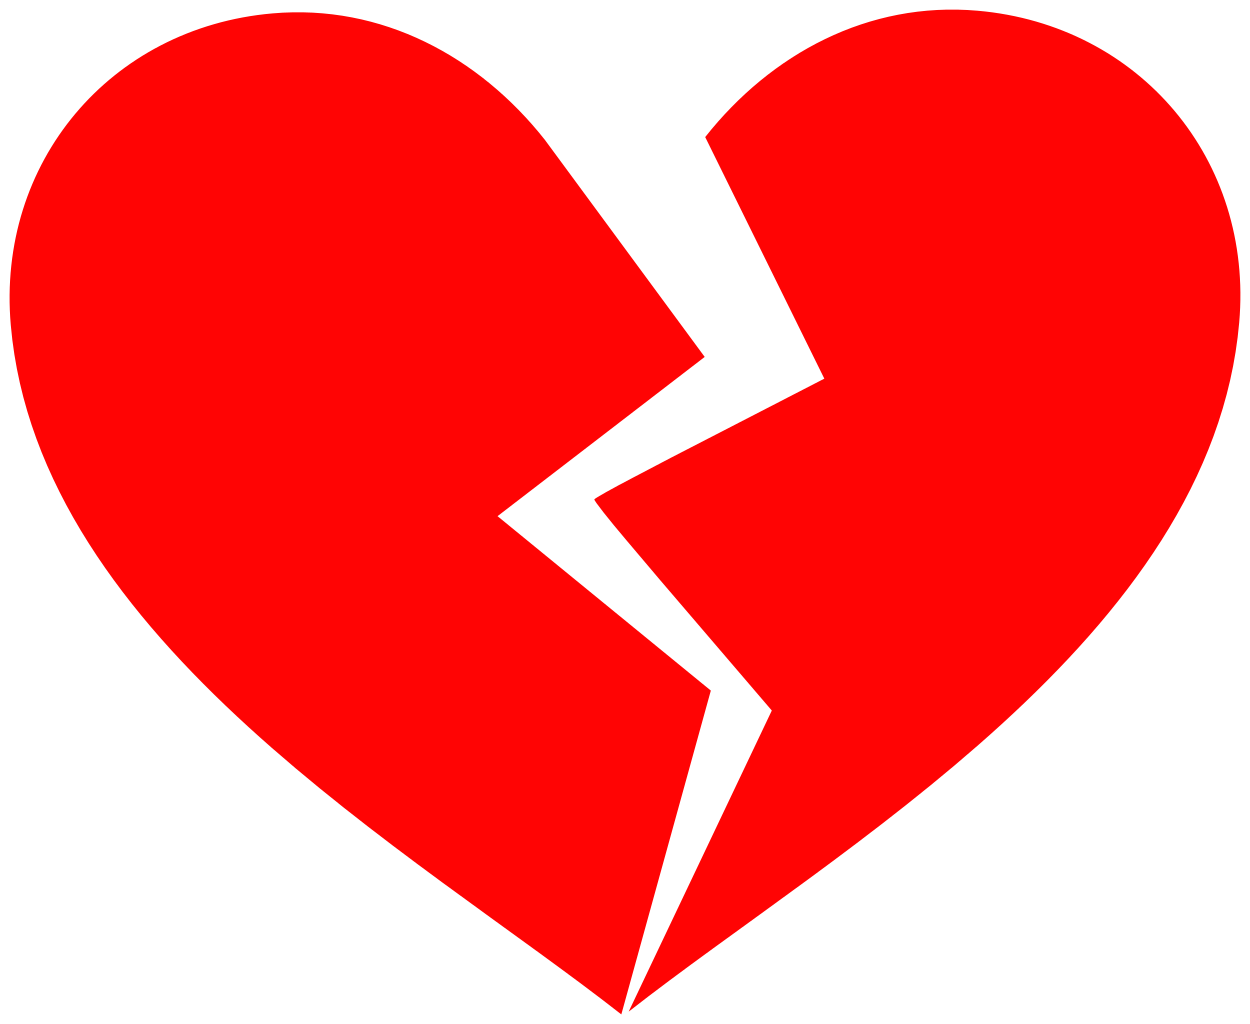 A person looking at a broken heart symbol.